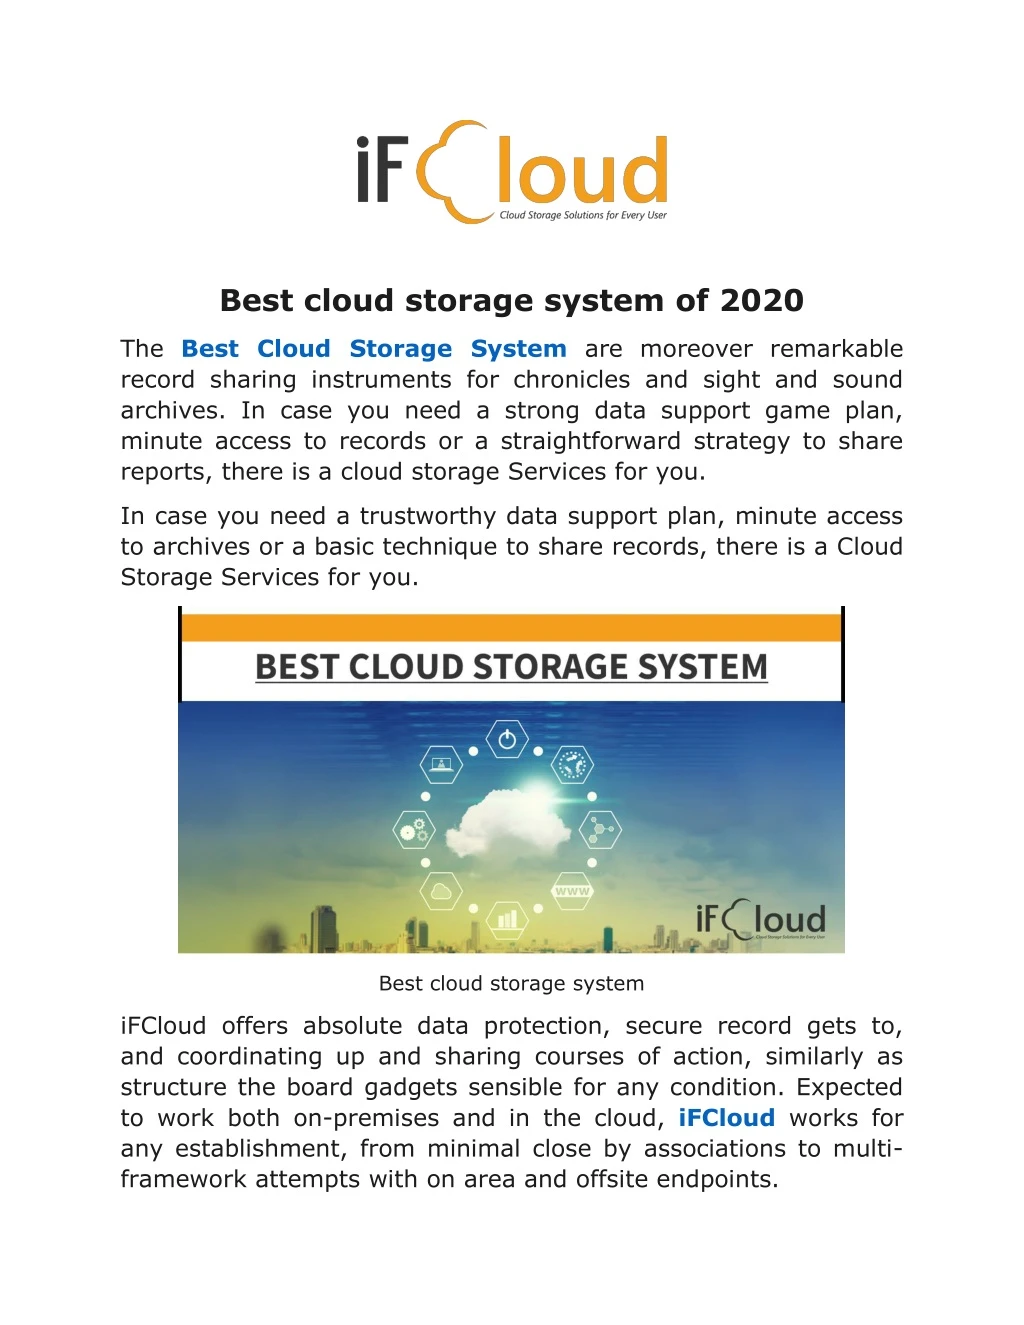 best cloud storage system of 2020